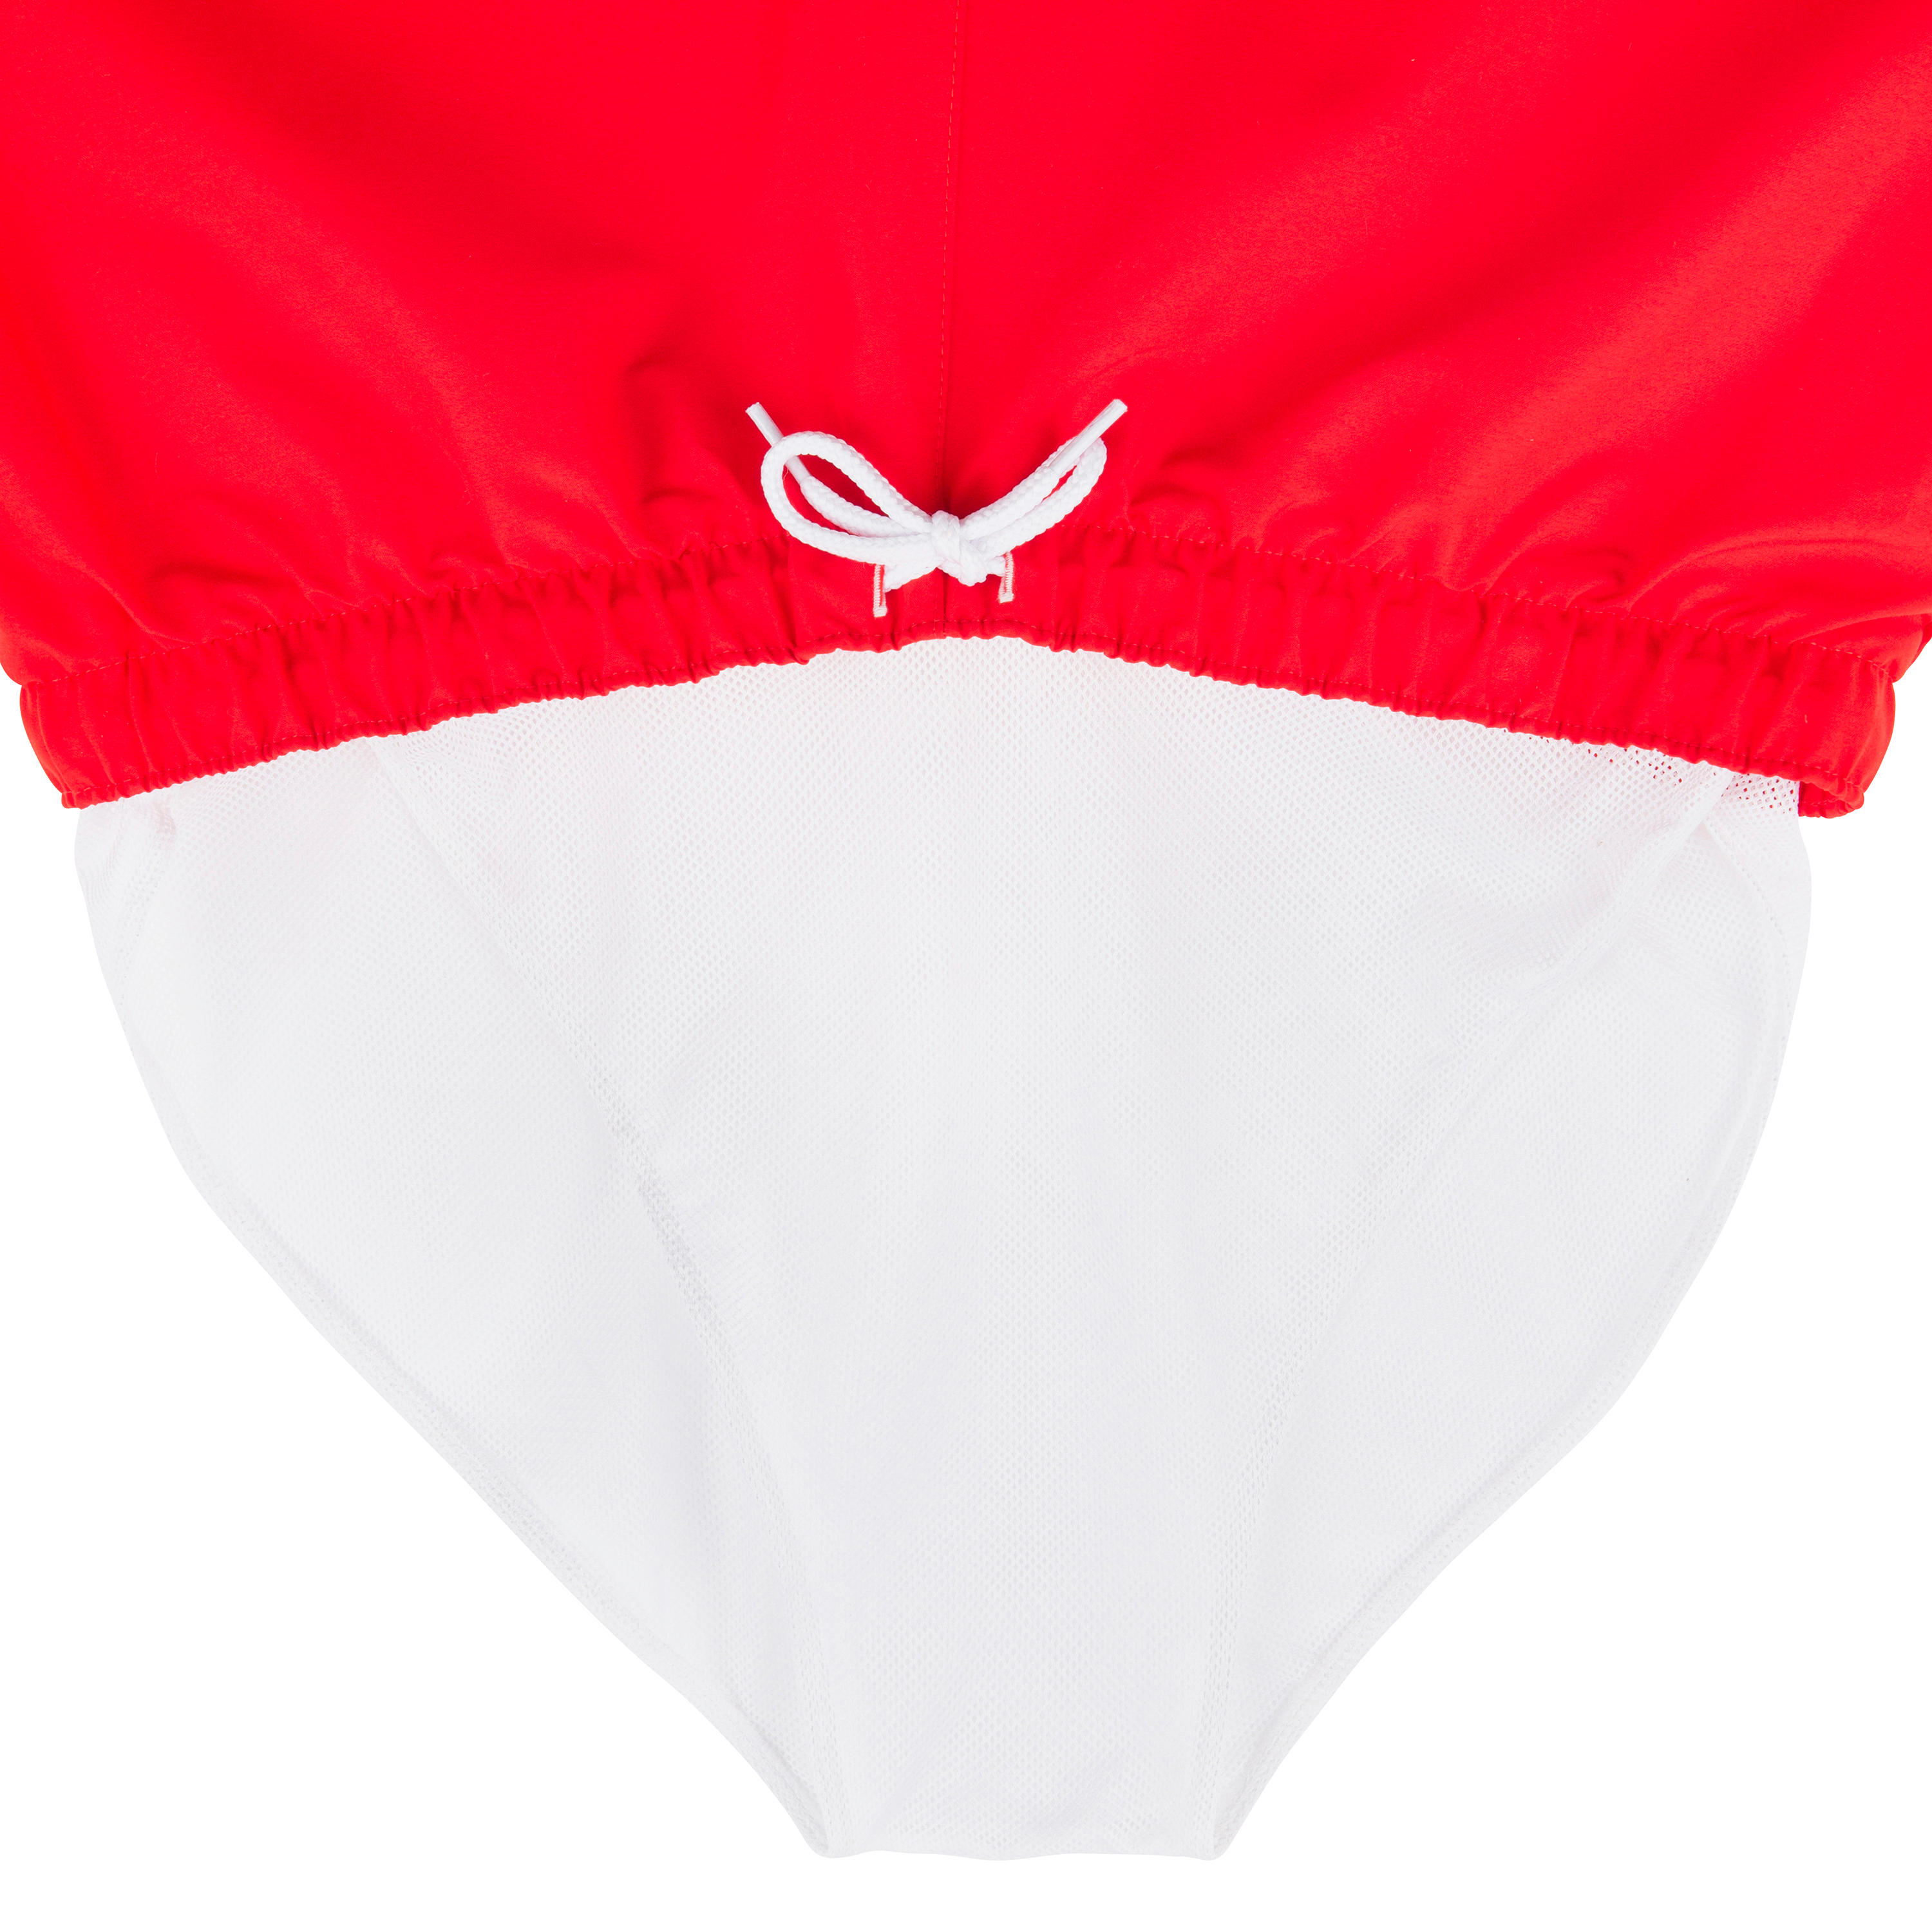 Hendaia Short Boardshorts - NT Red 5/5